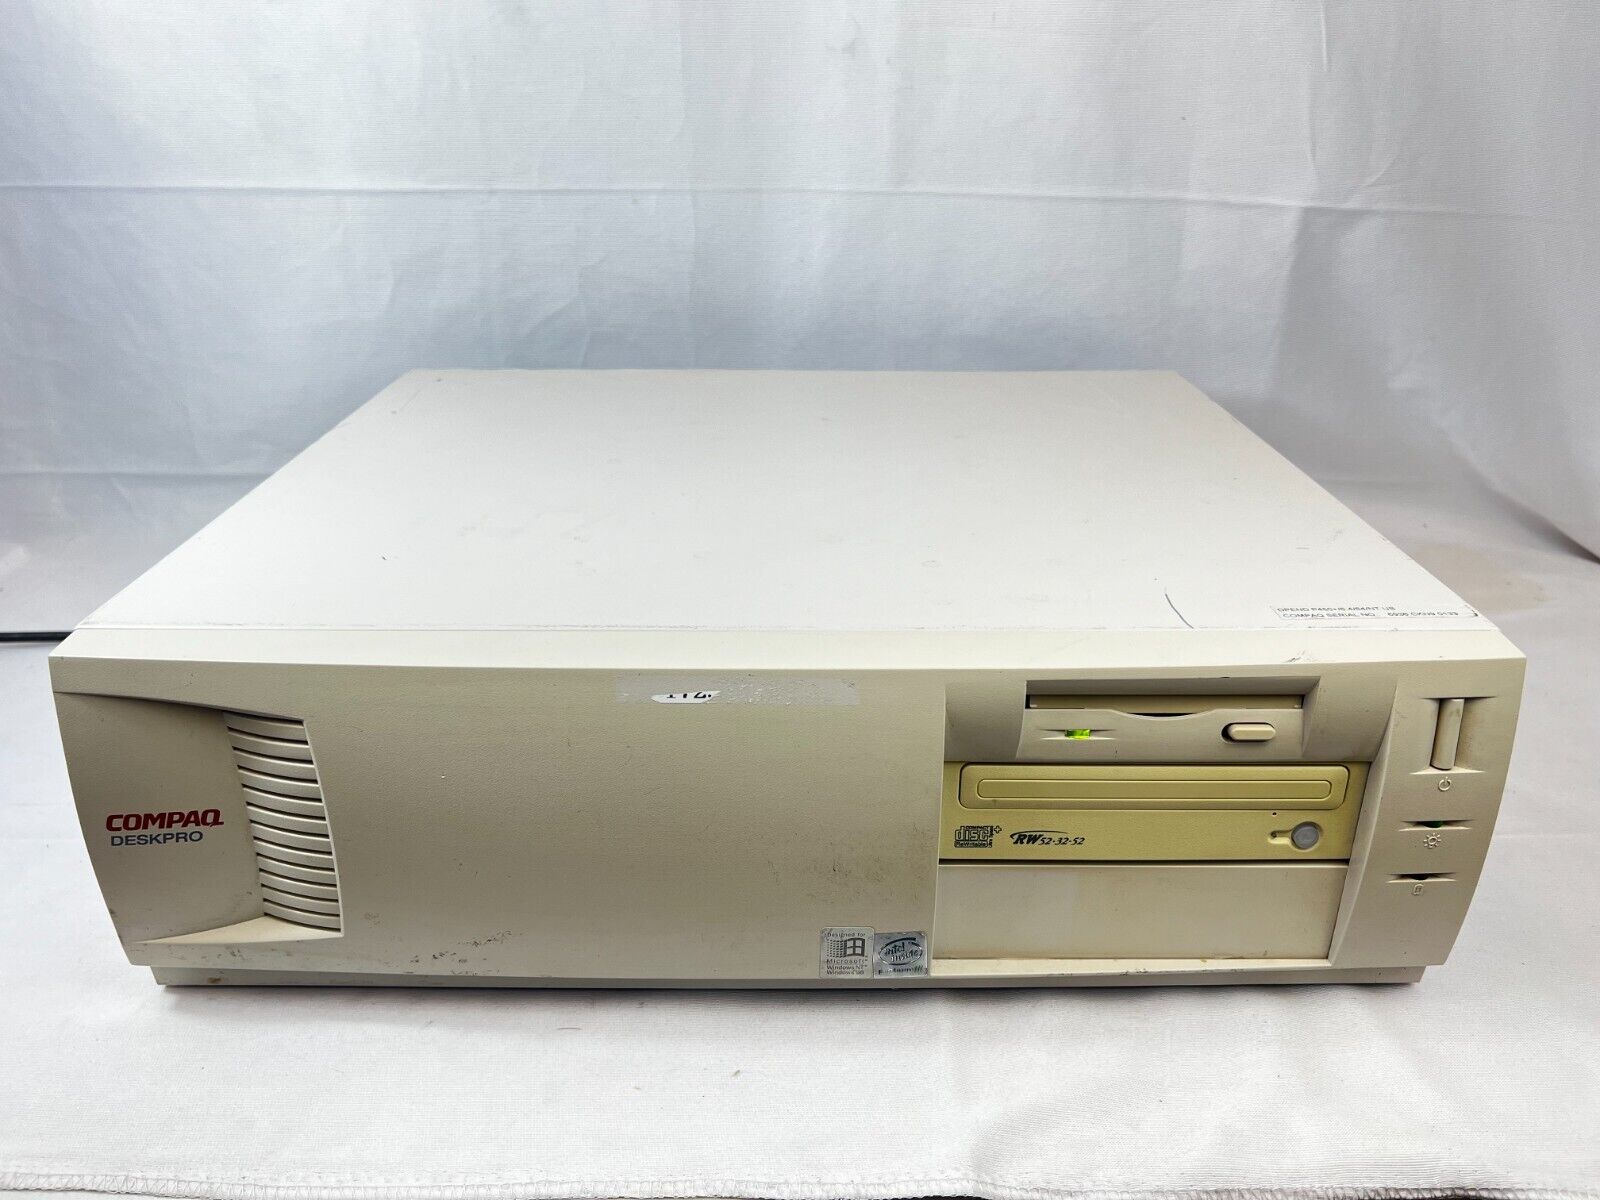 (W) Compaq Deskpro PD1005 EN Desktop Intel Pentium III w/ RW 523252 [VINTAGE]